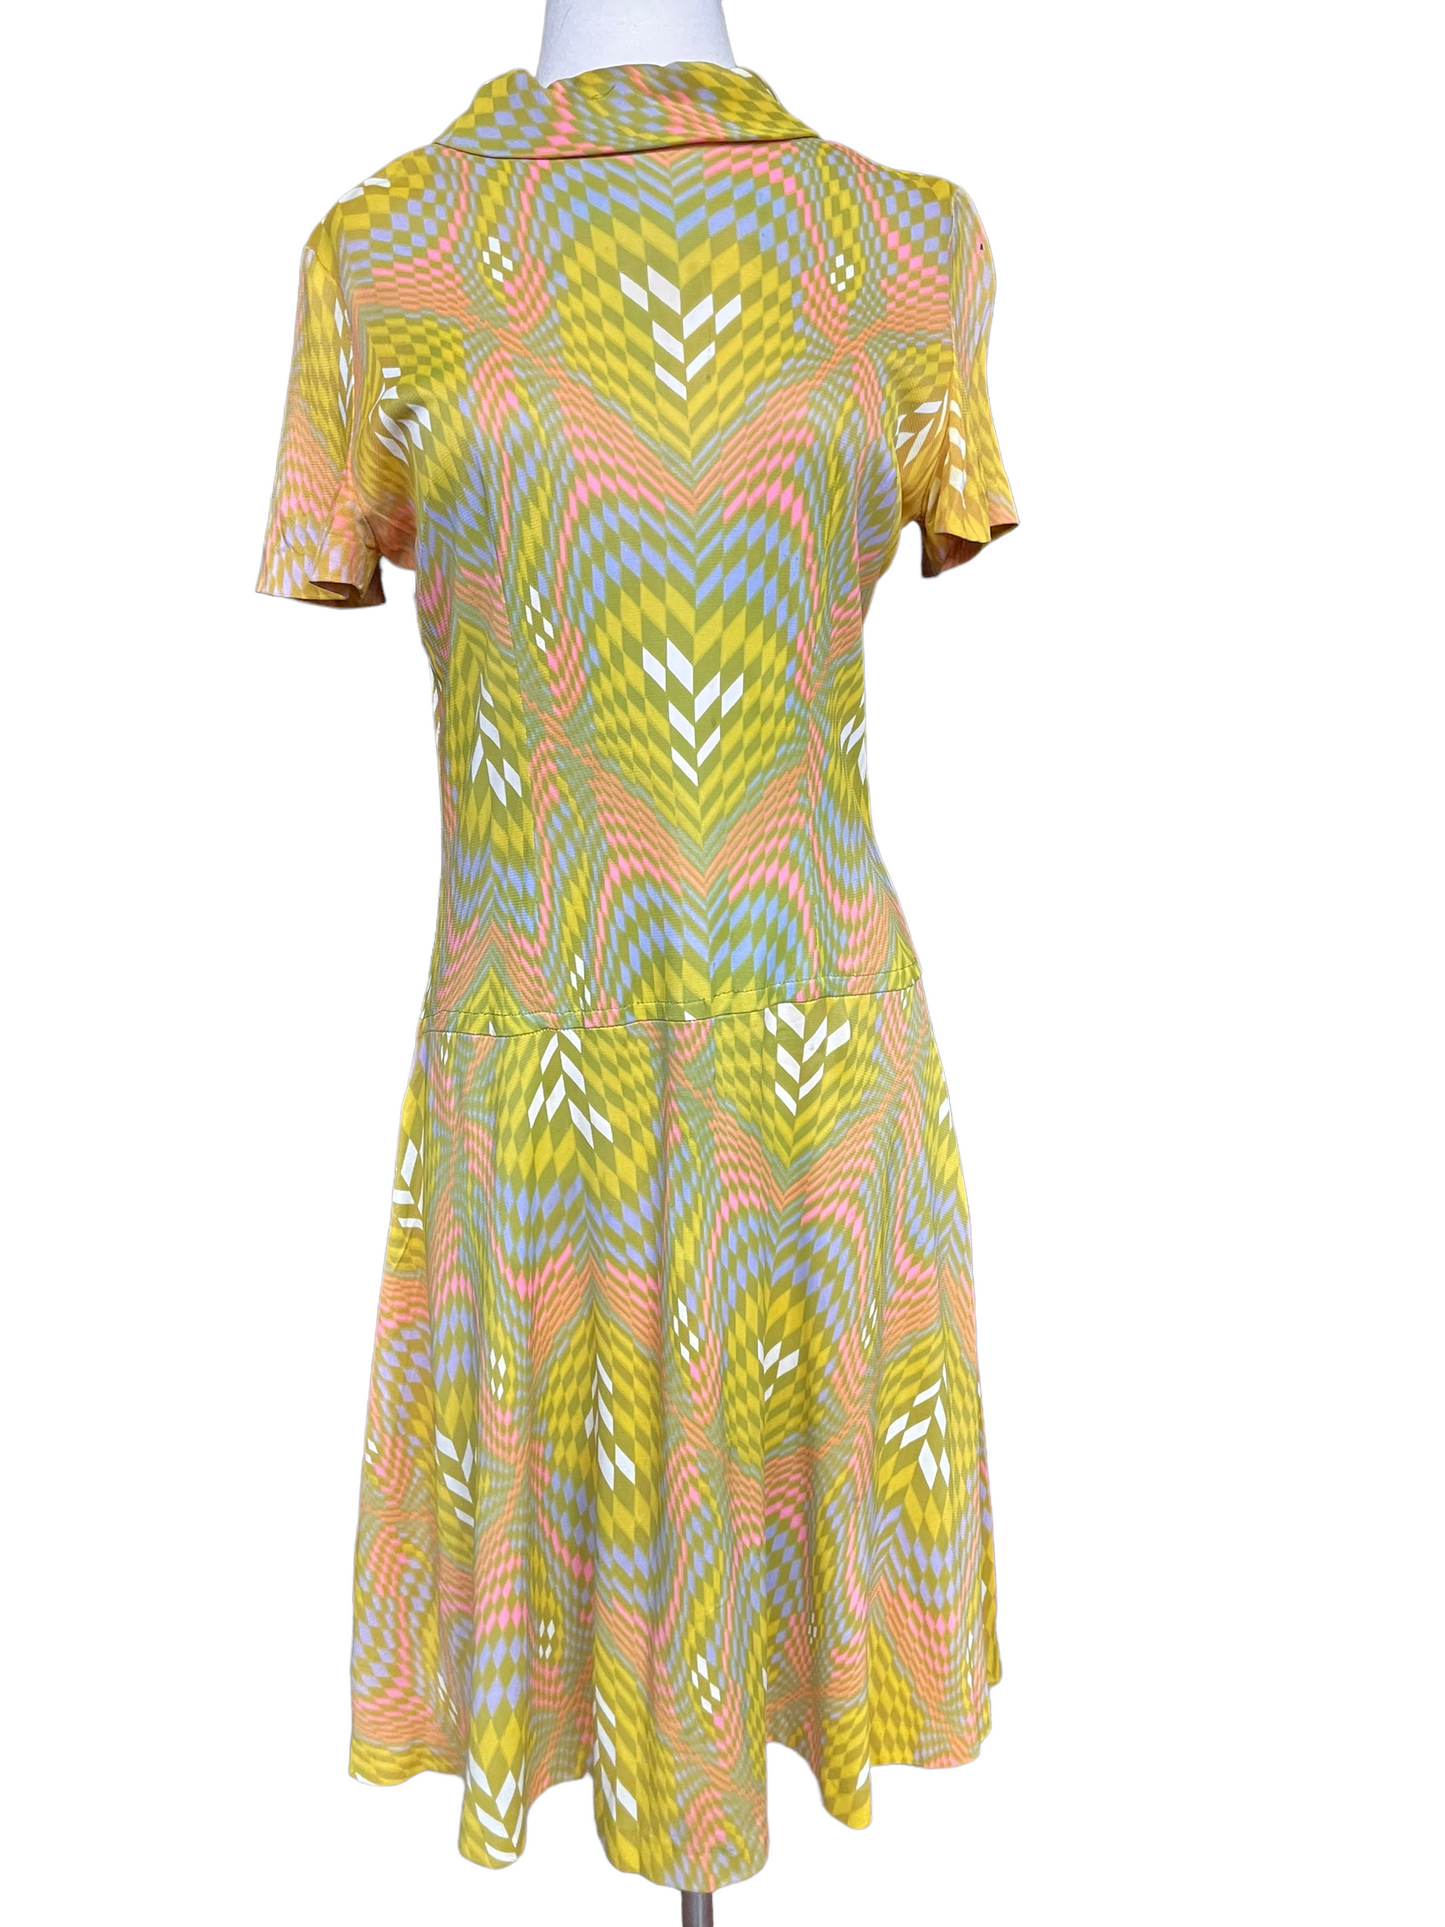 Full front view of Vintage 1960s Geometric Pattern Dress SZ M | Seattle Vintage Dresses | Barn Owl Vintage